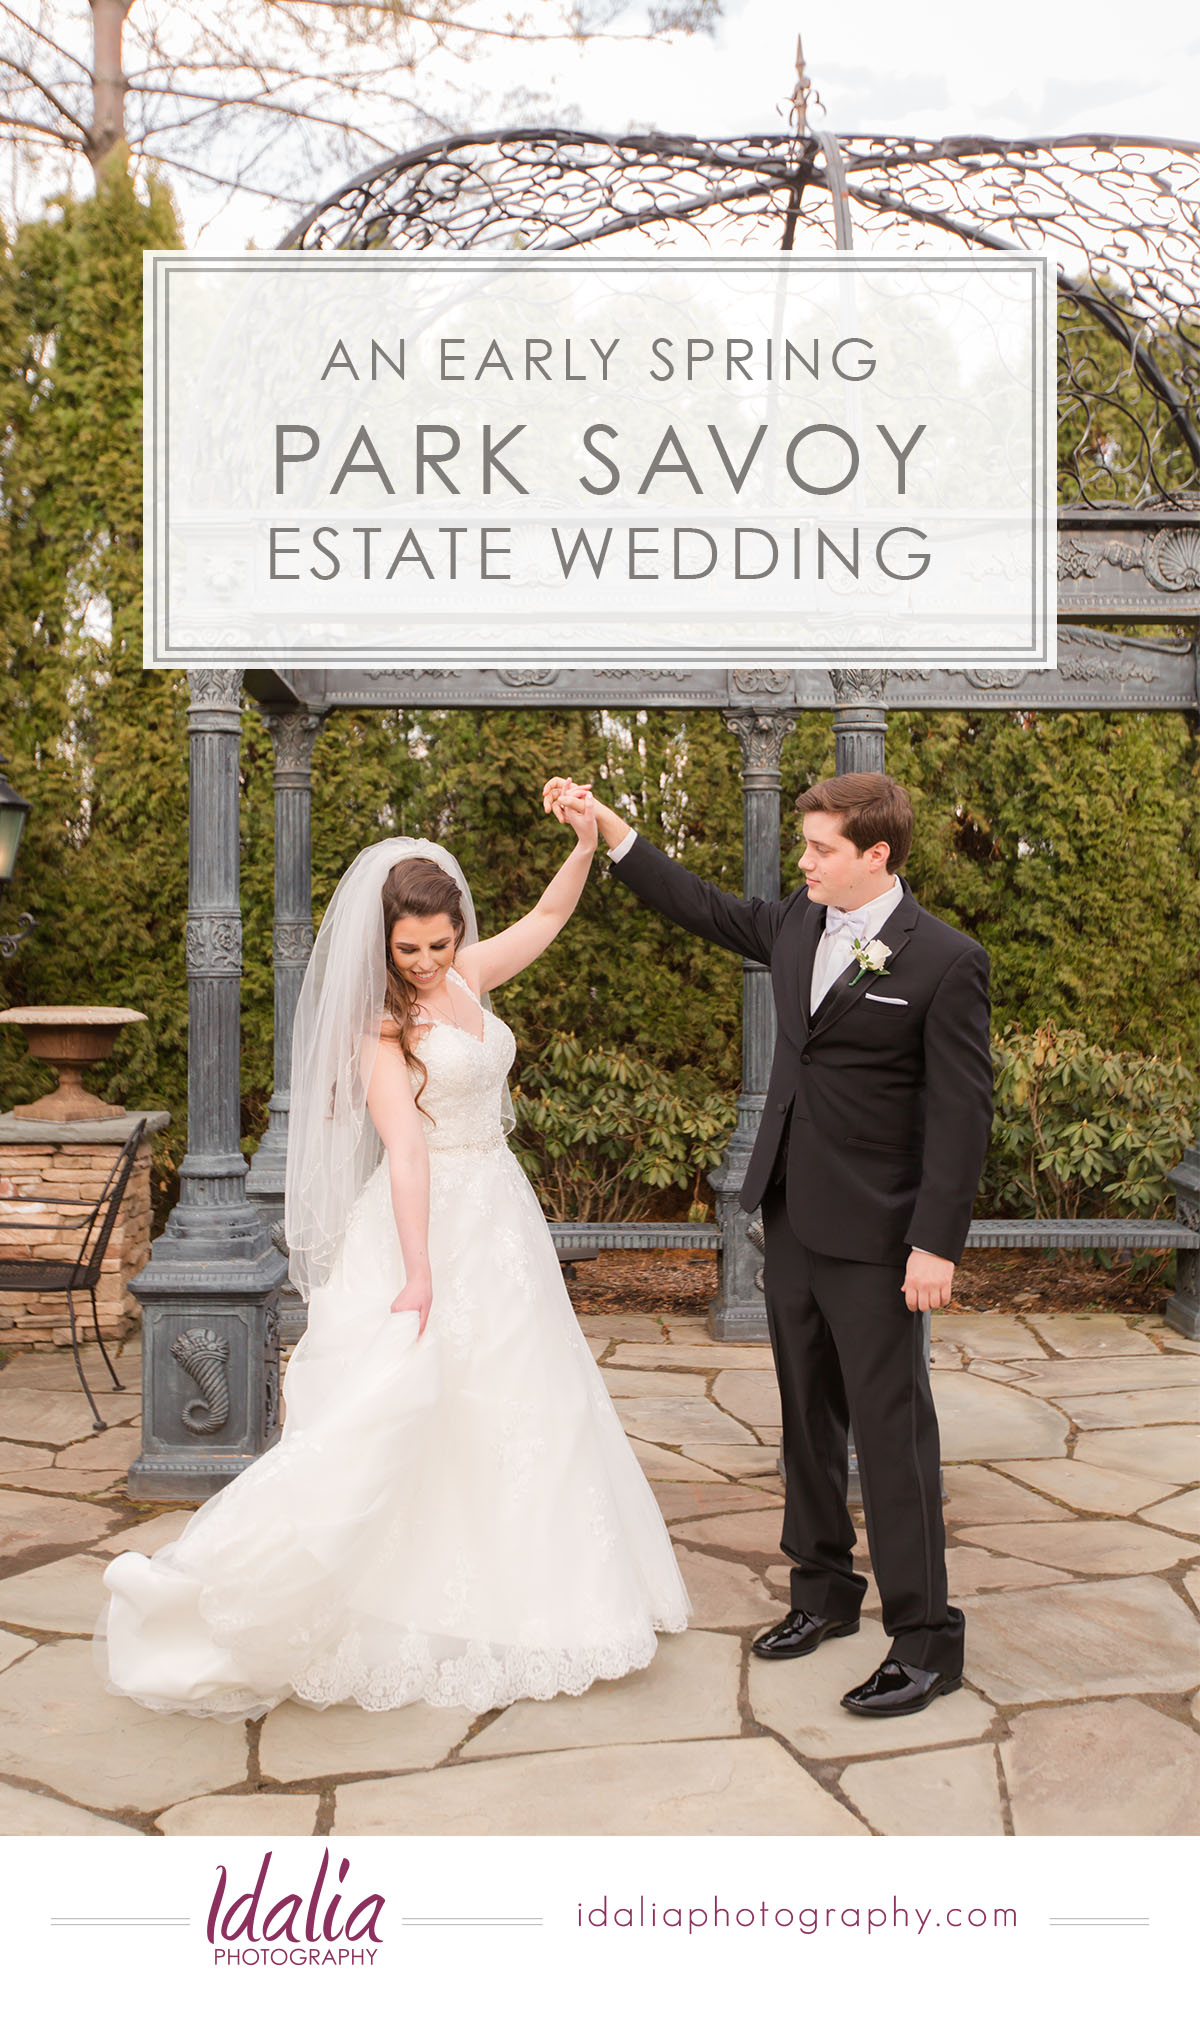 A spring wedding at Park Savoy Estate